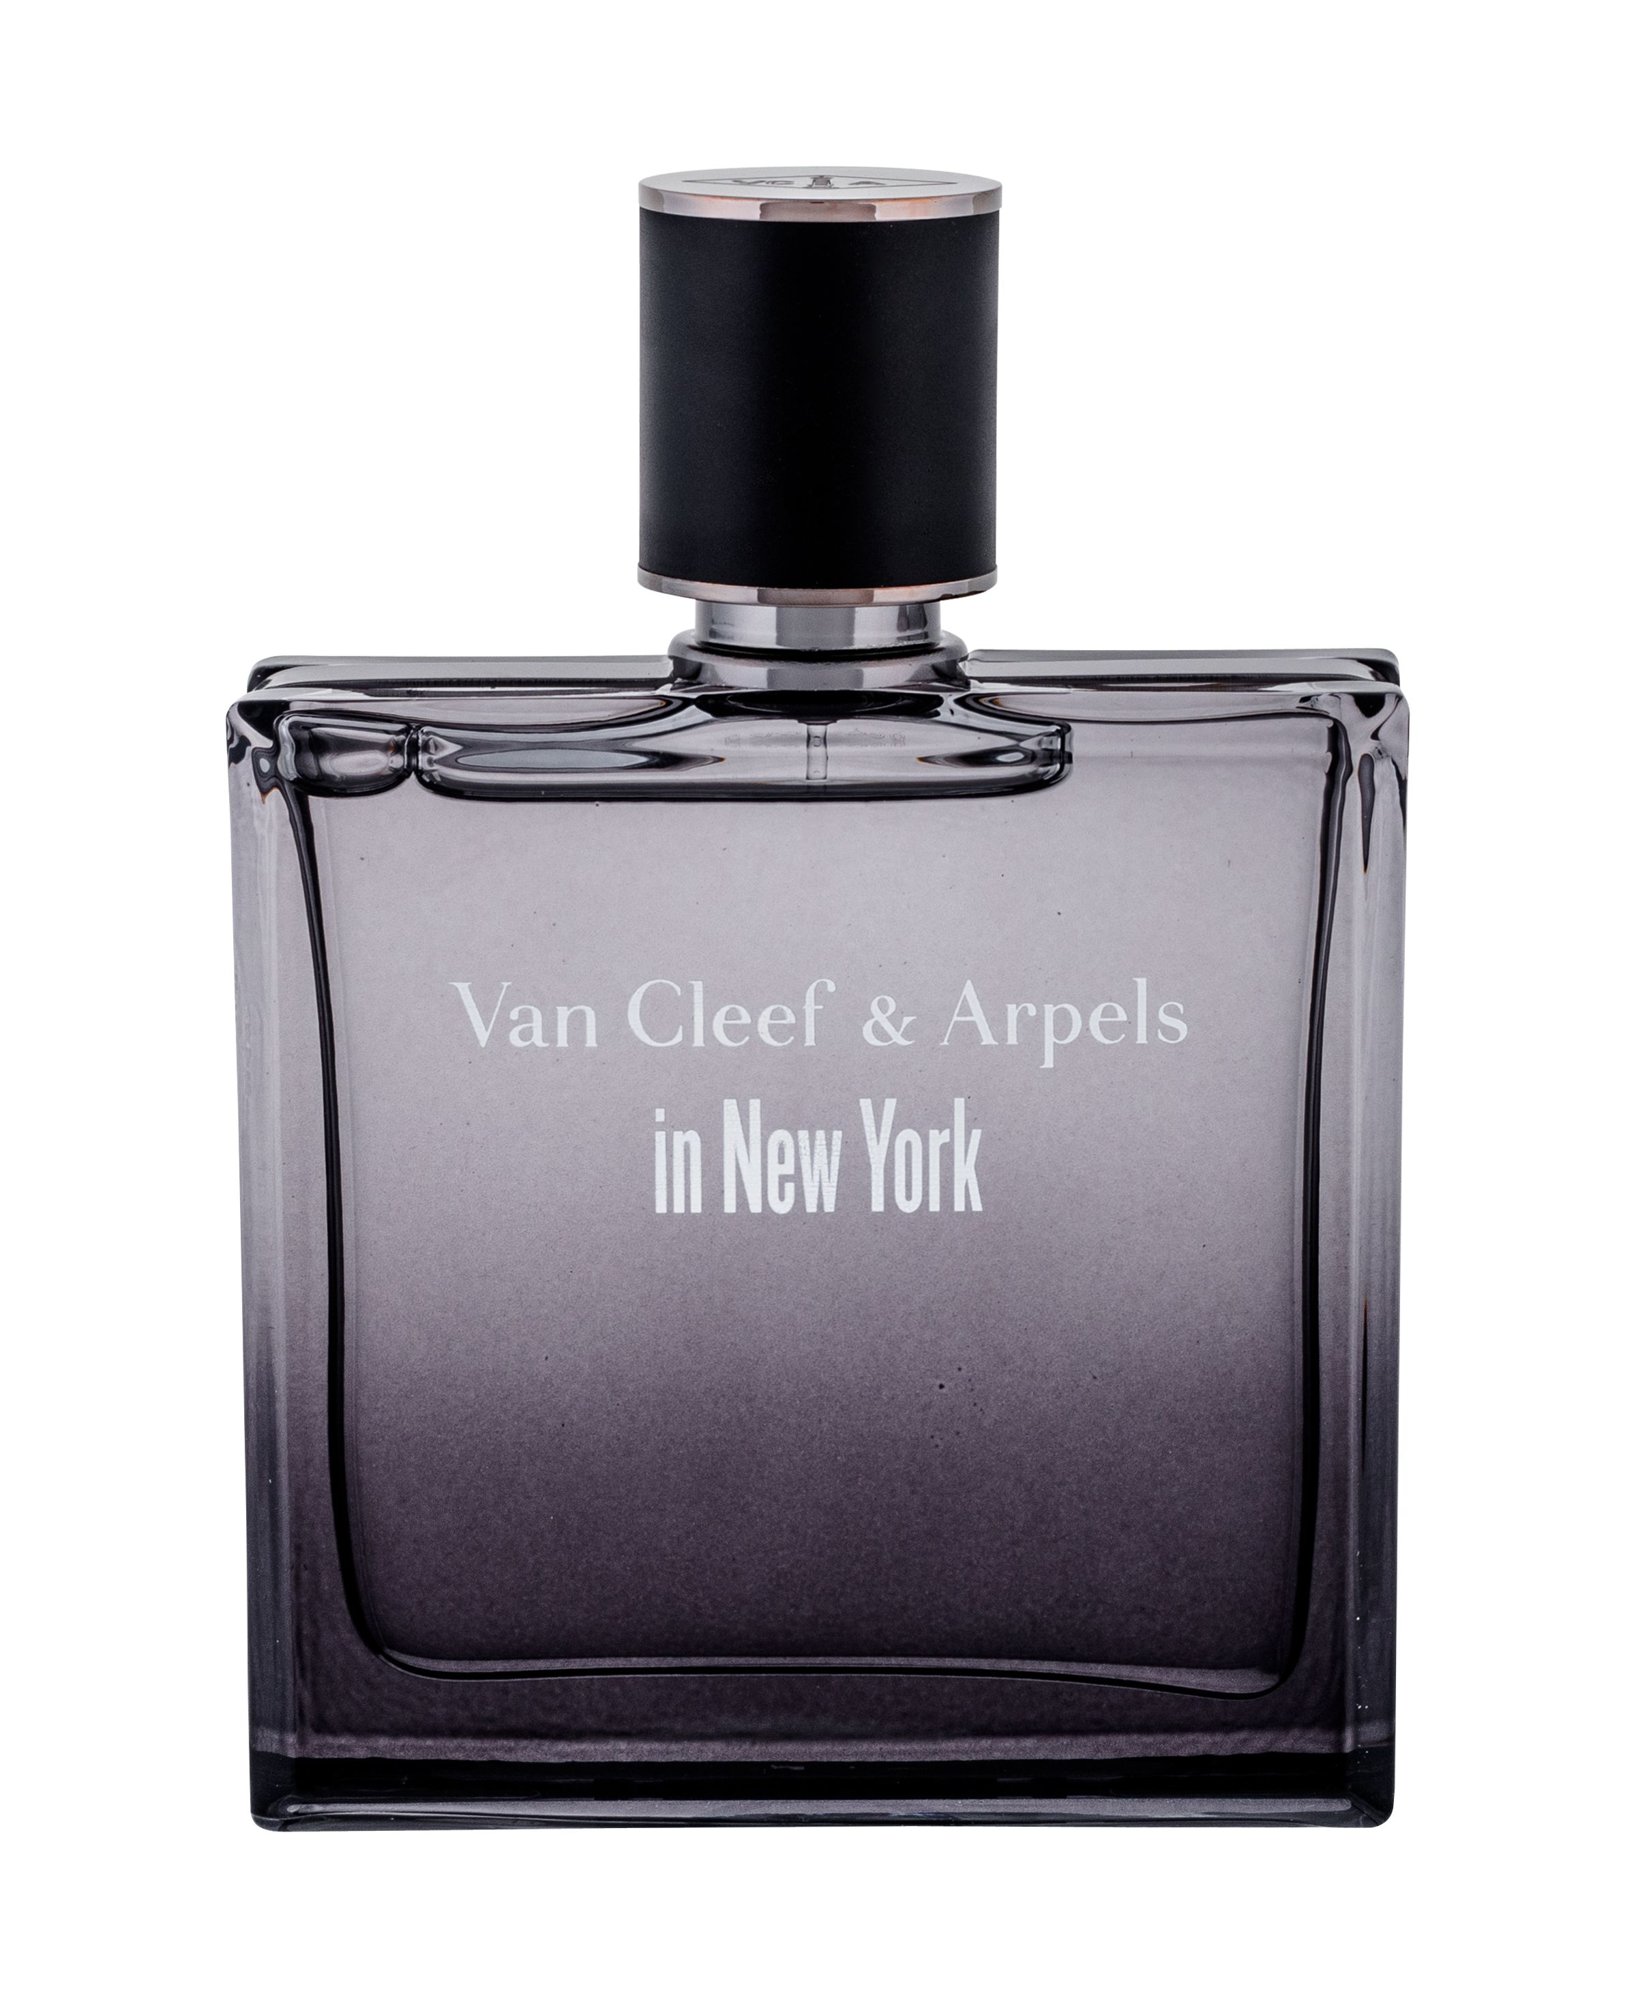 Van Cleef & Arpels In New York, Toaletní voda 125ml